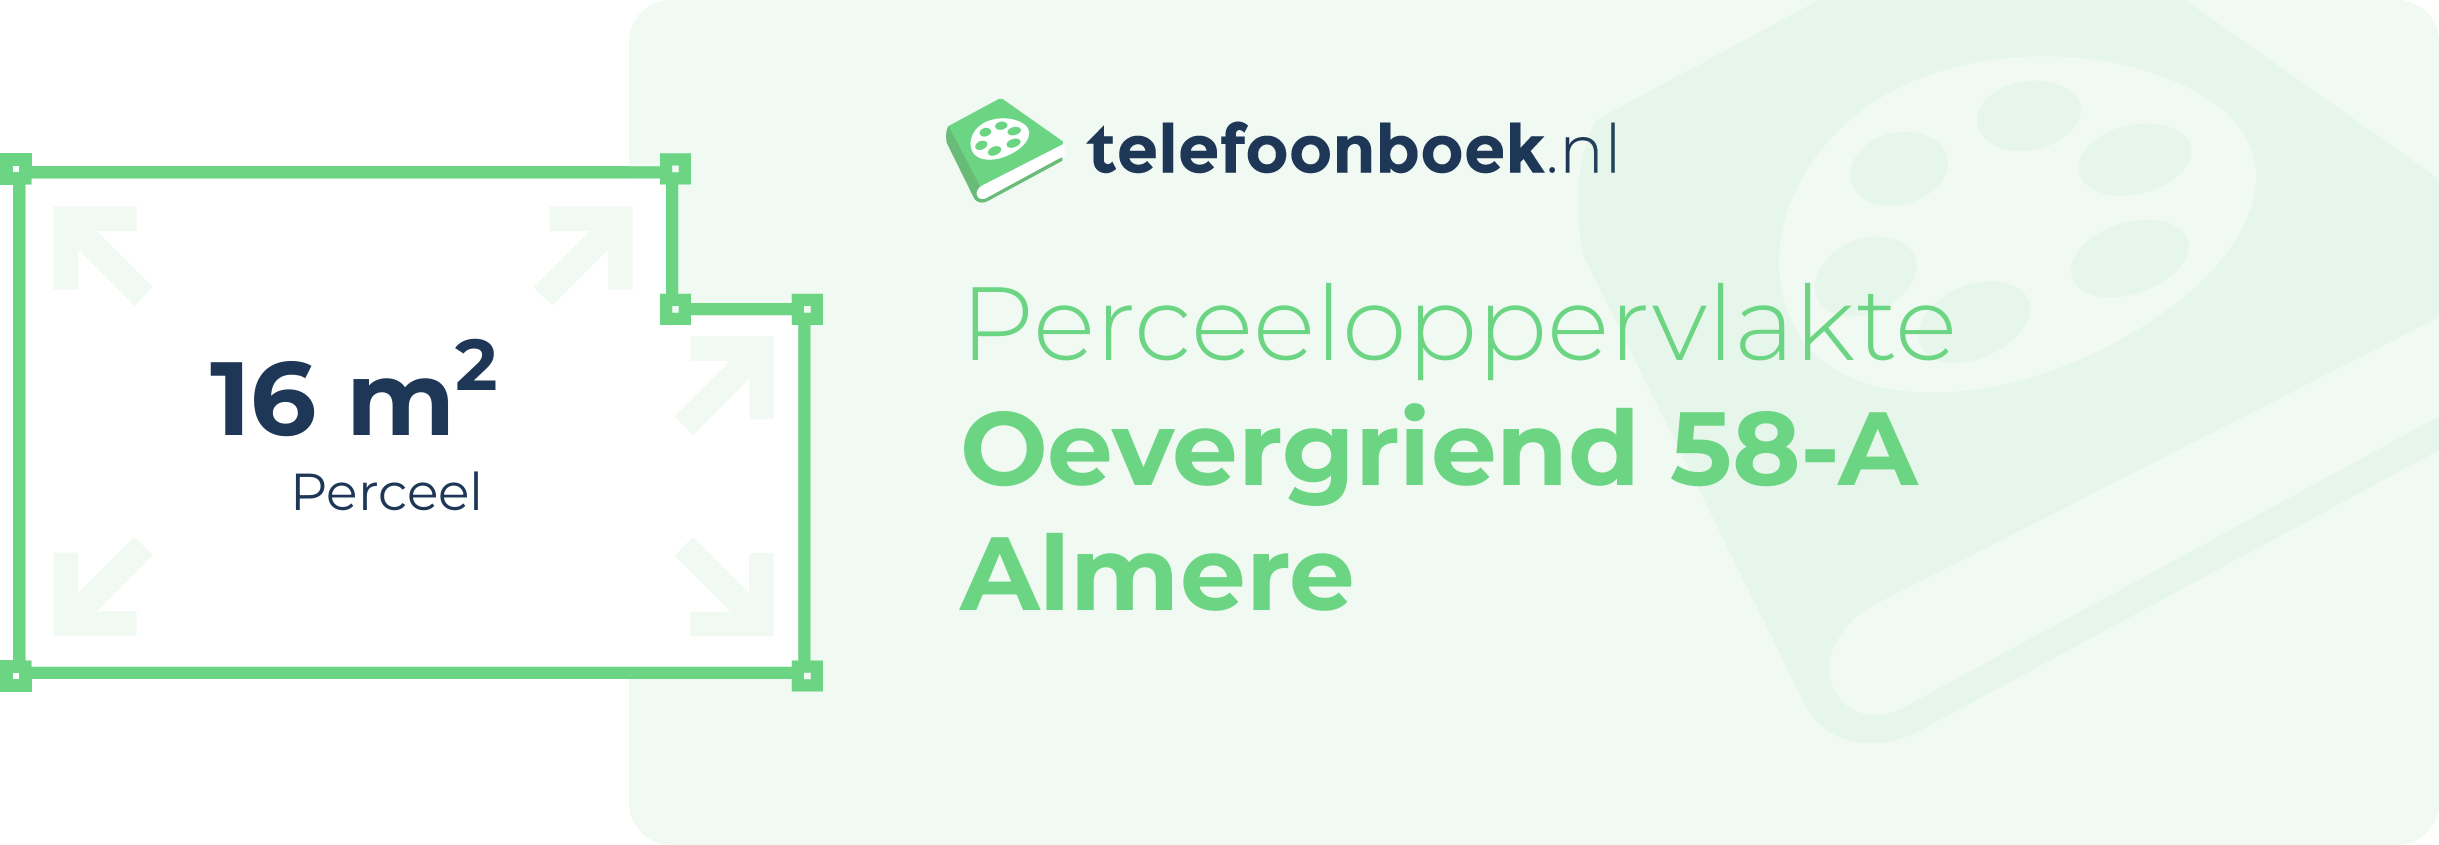 Perceeloppervlakte Oevergriend 58-A Almere